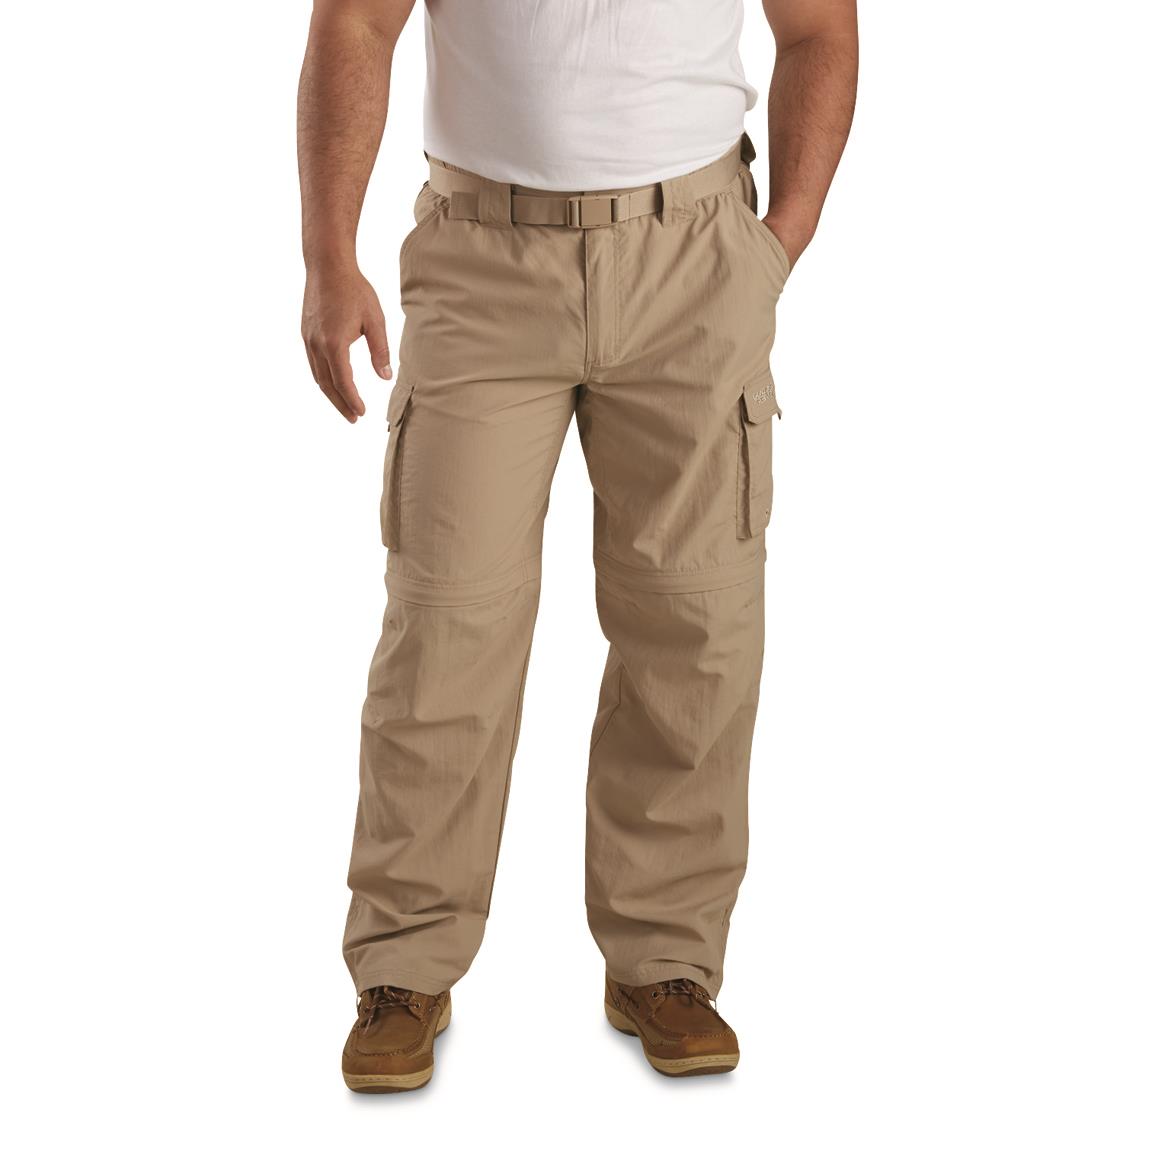 Guide Gear Men's Rock River Zip-Off Cargo Pants, Khaki